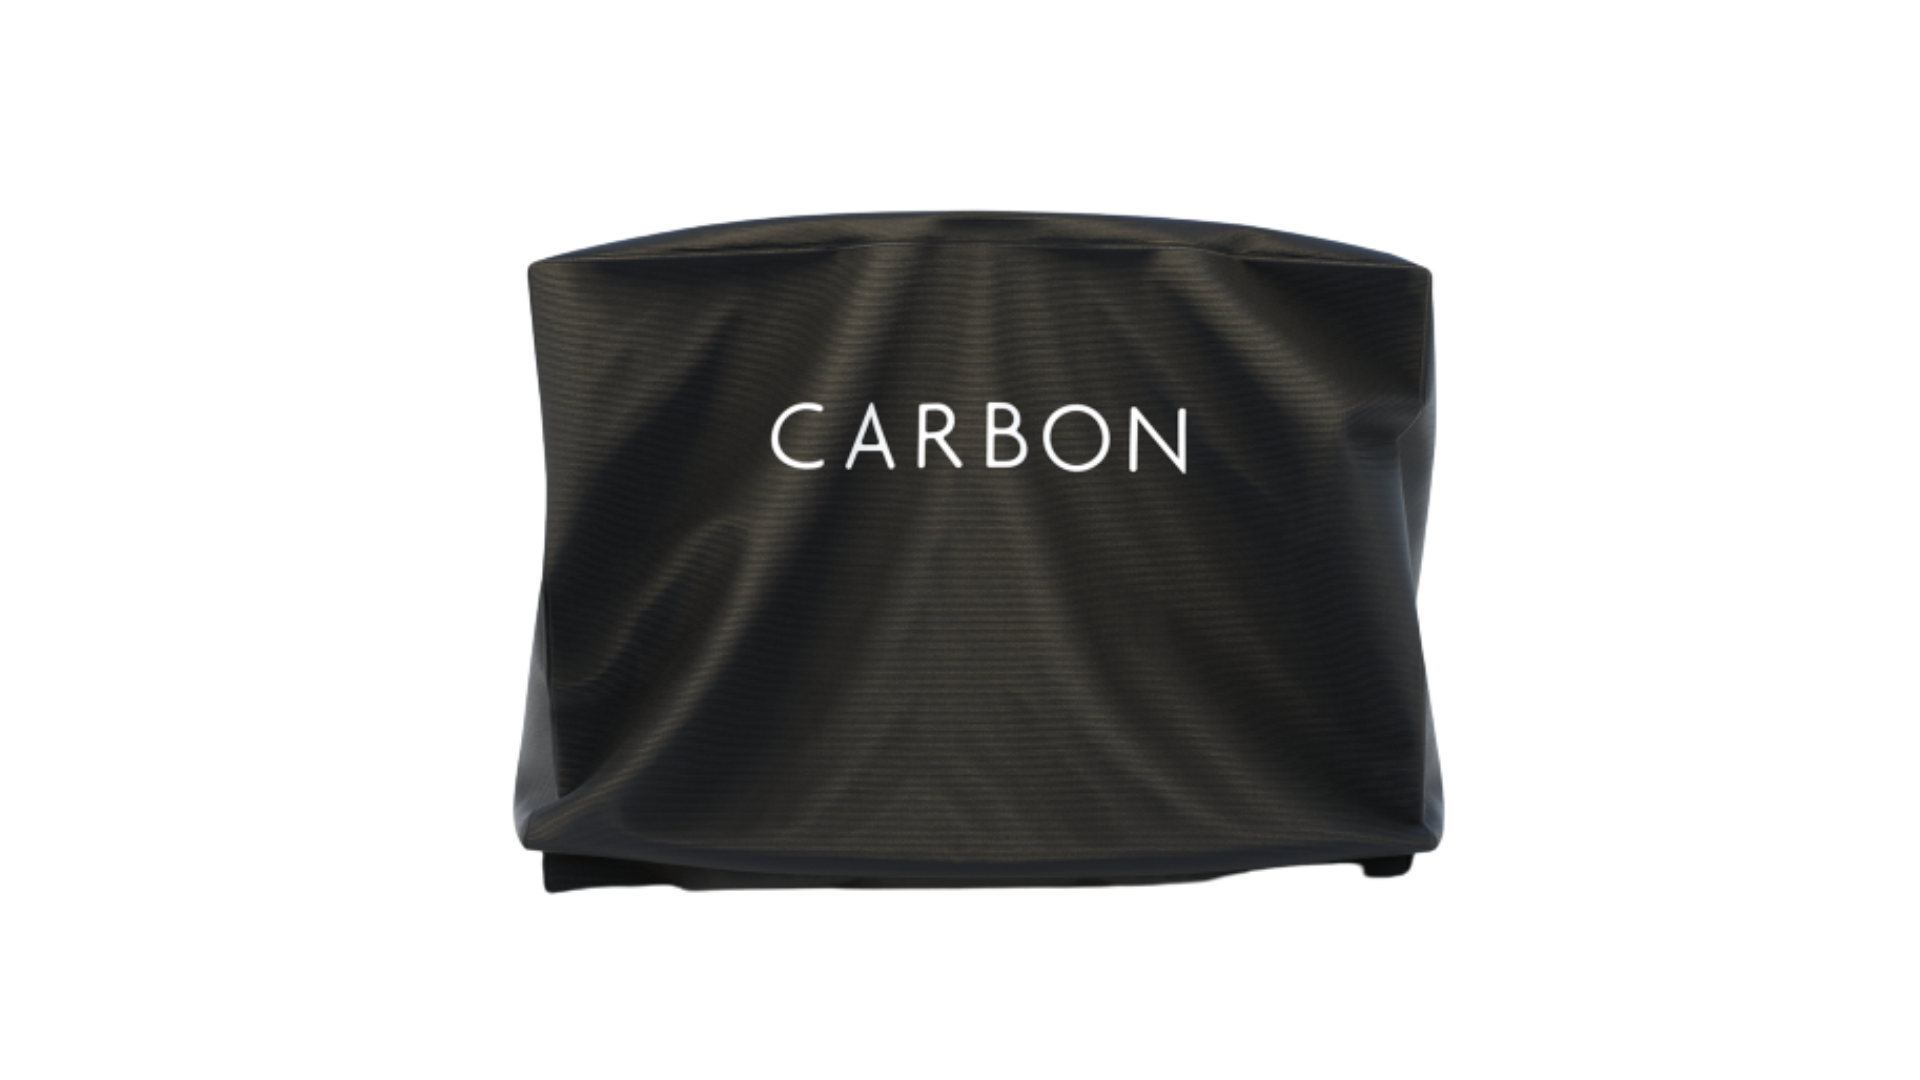 Carbon pizza oven premium cover in black color